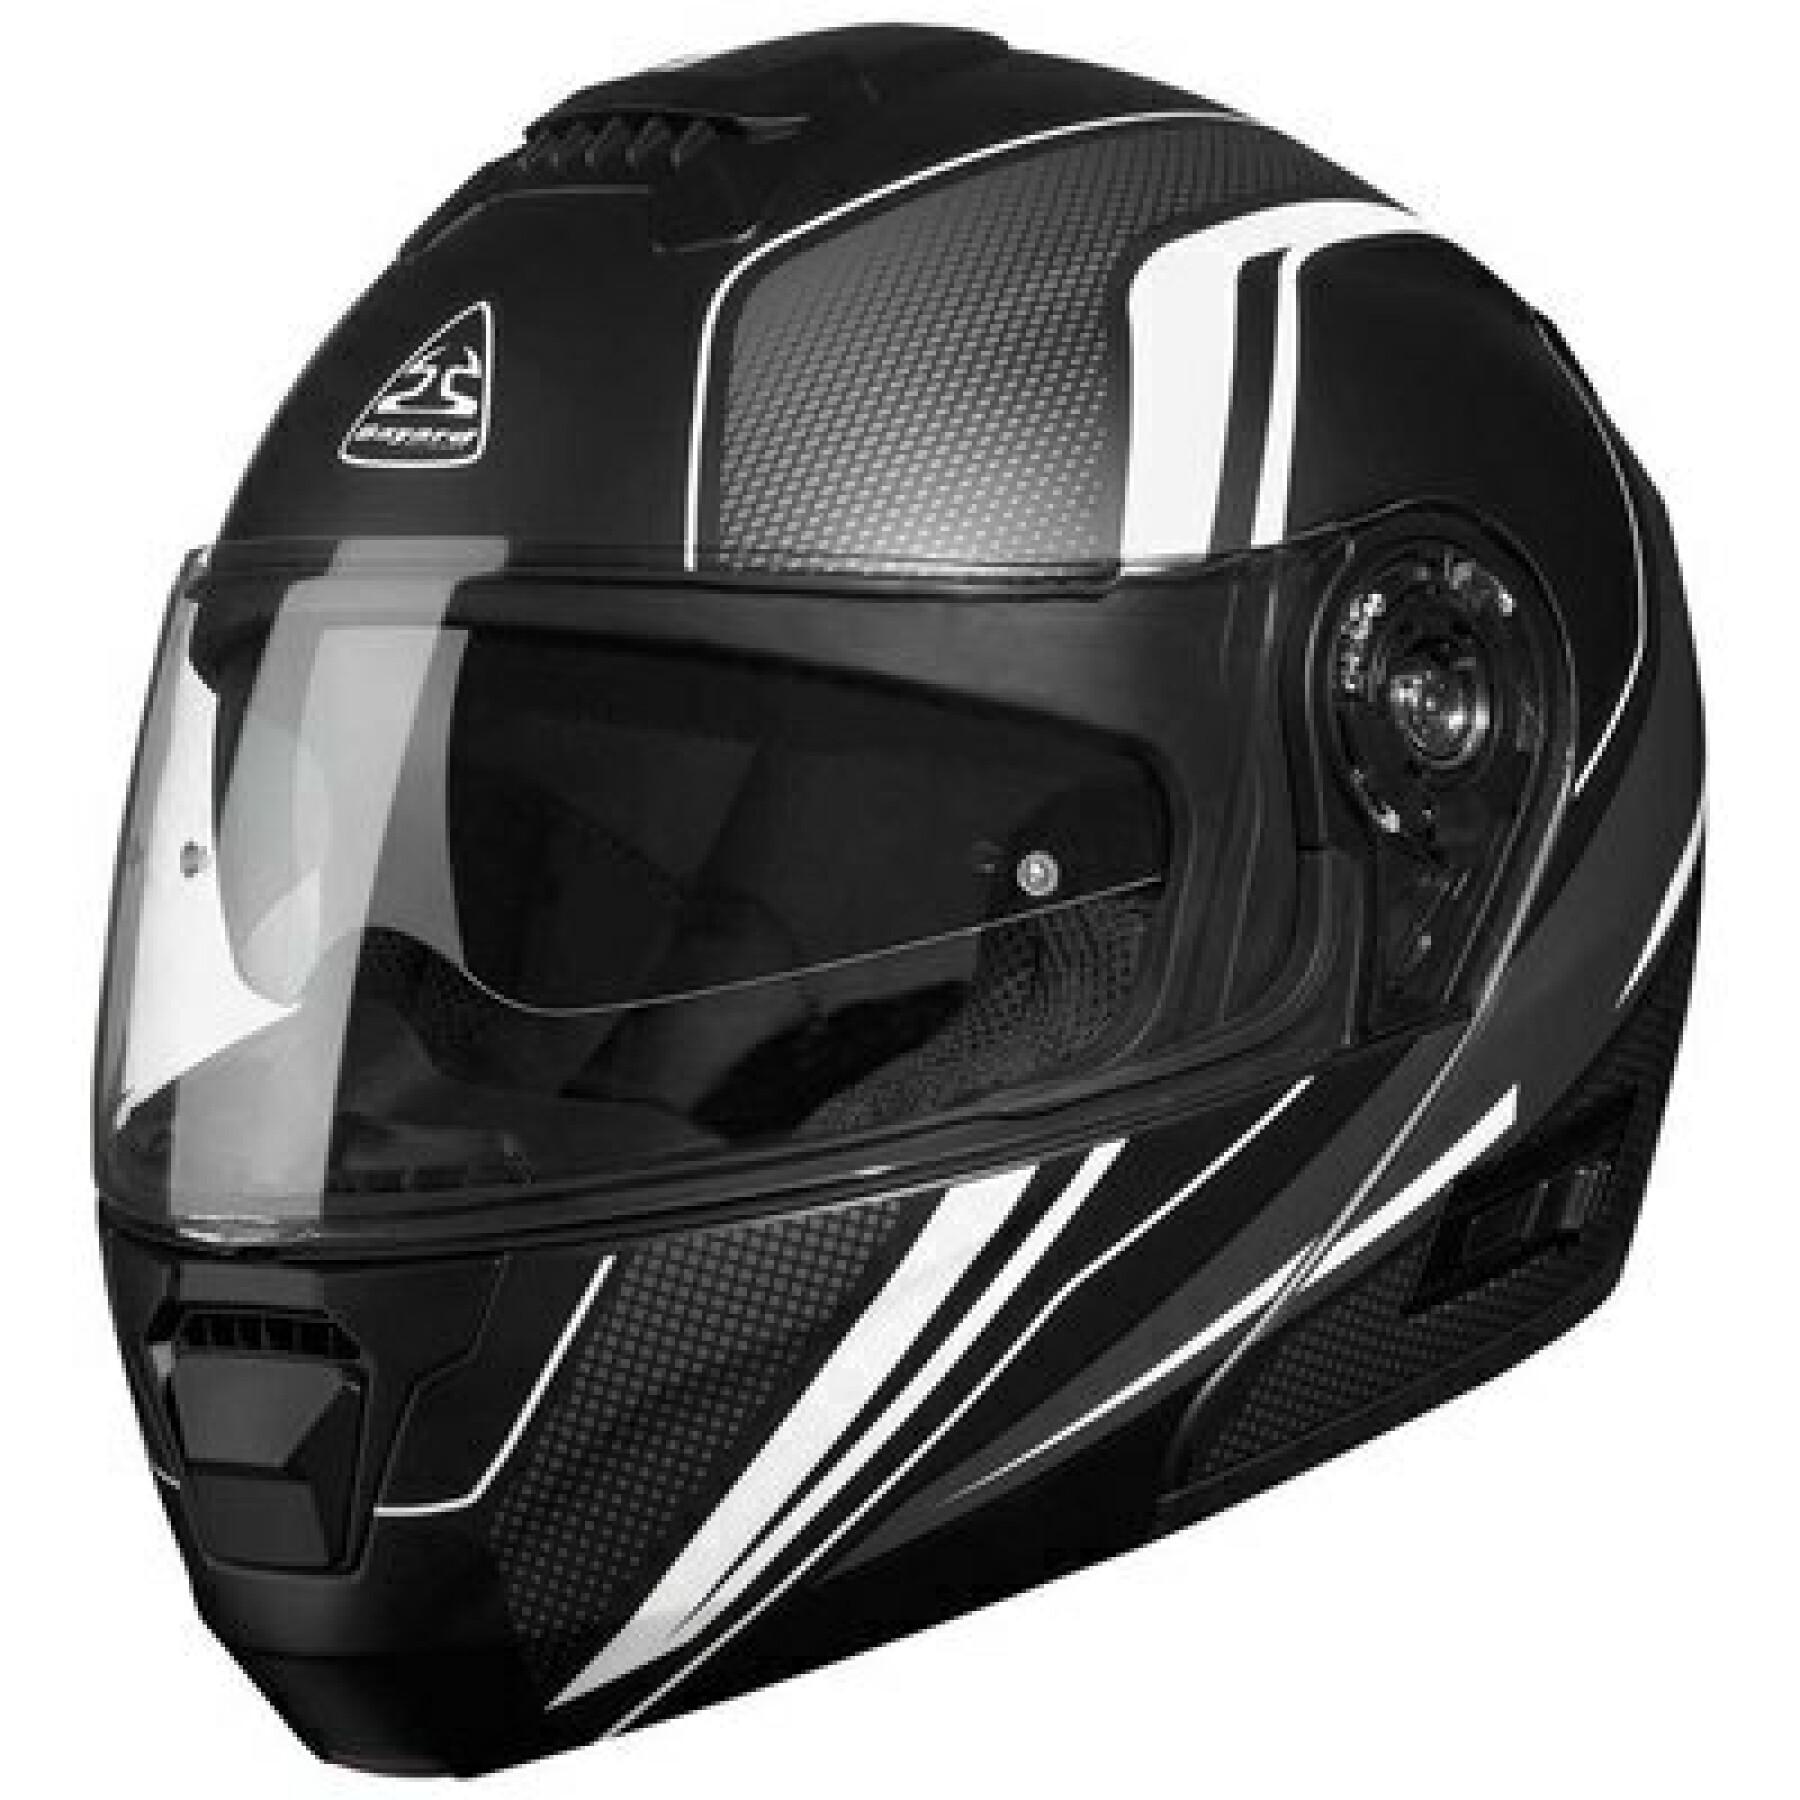 Modular motorcycle helmet Bayard fp-20 s vegas